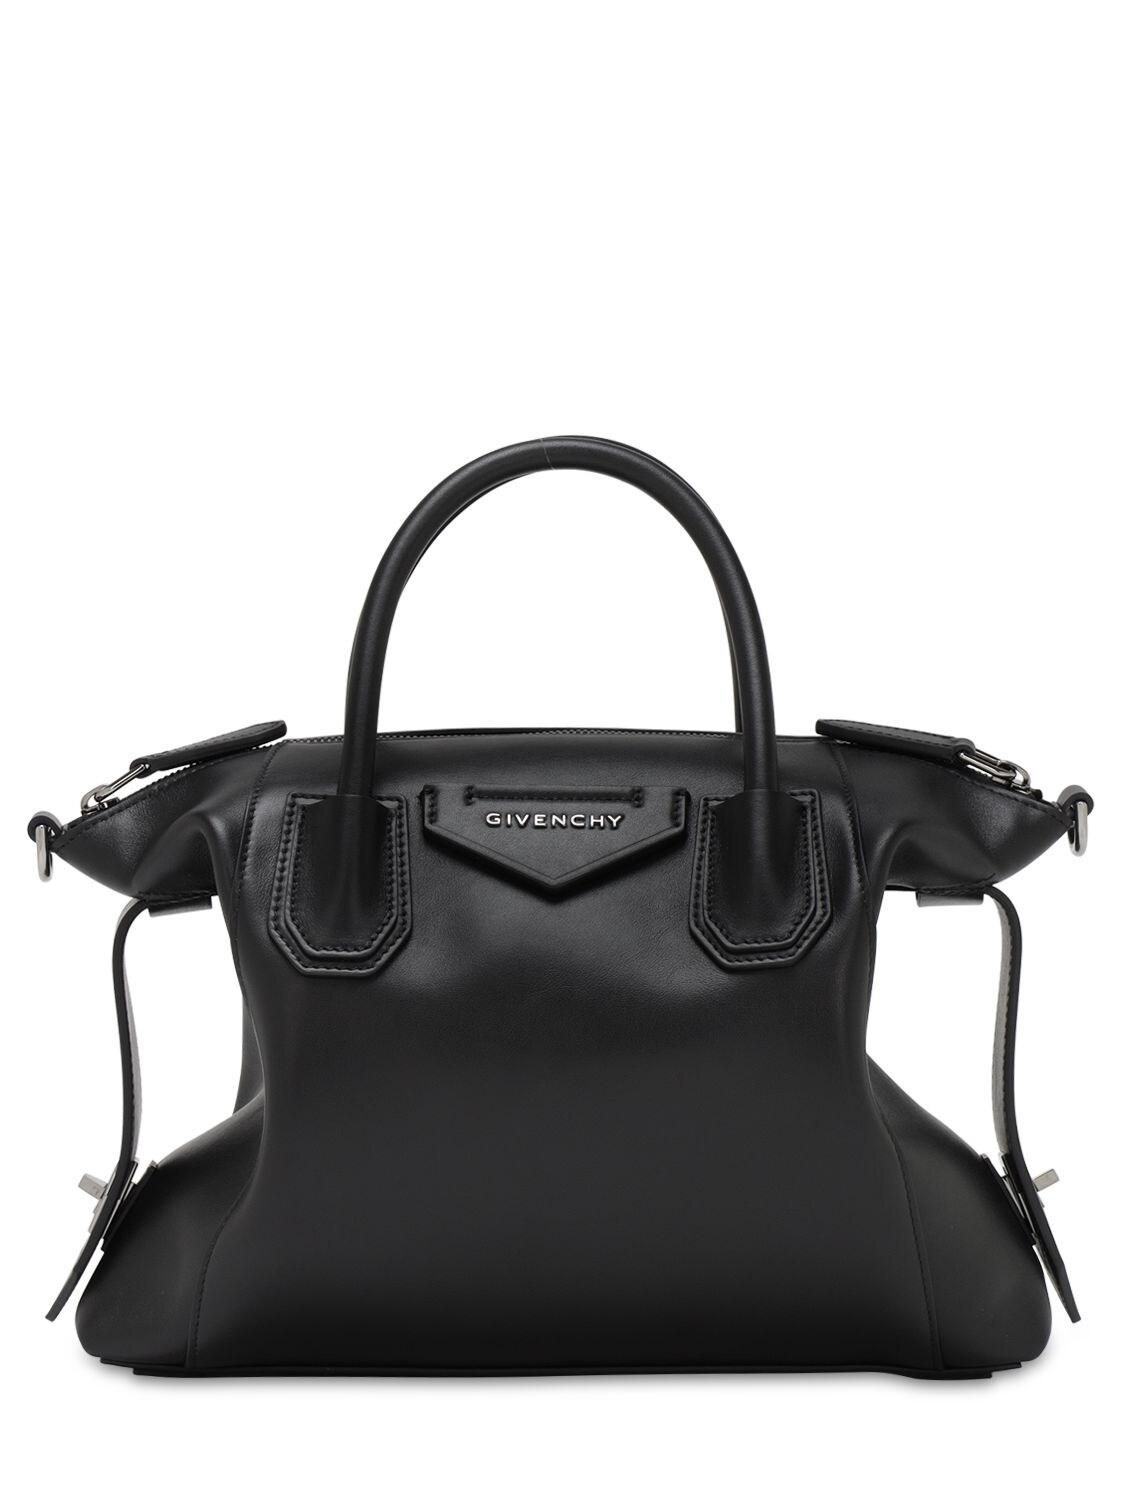 Givenchy Antigona Soft Leather Bag in Black - Lyst